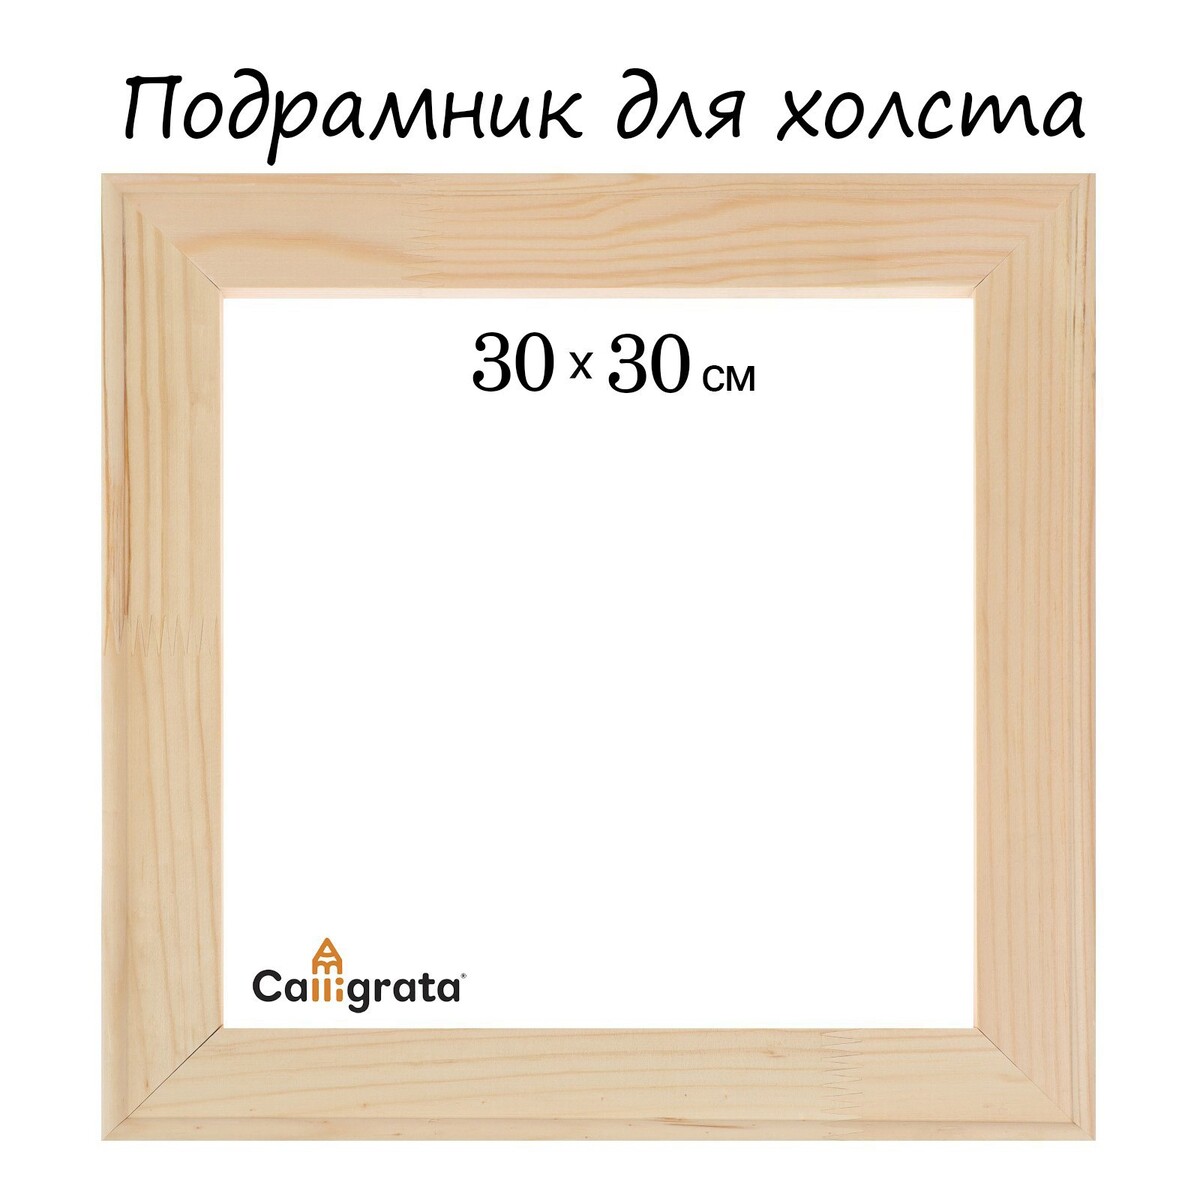 Подрамник для холста 30 х 30 х 1,8 см, ширина профиля 36 мм, calligrata Calligrata 01044399 - фото 1